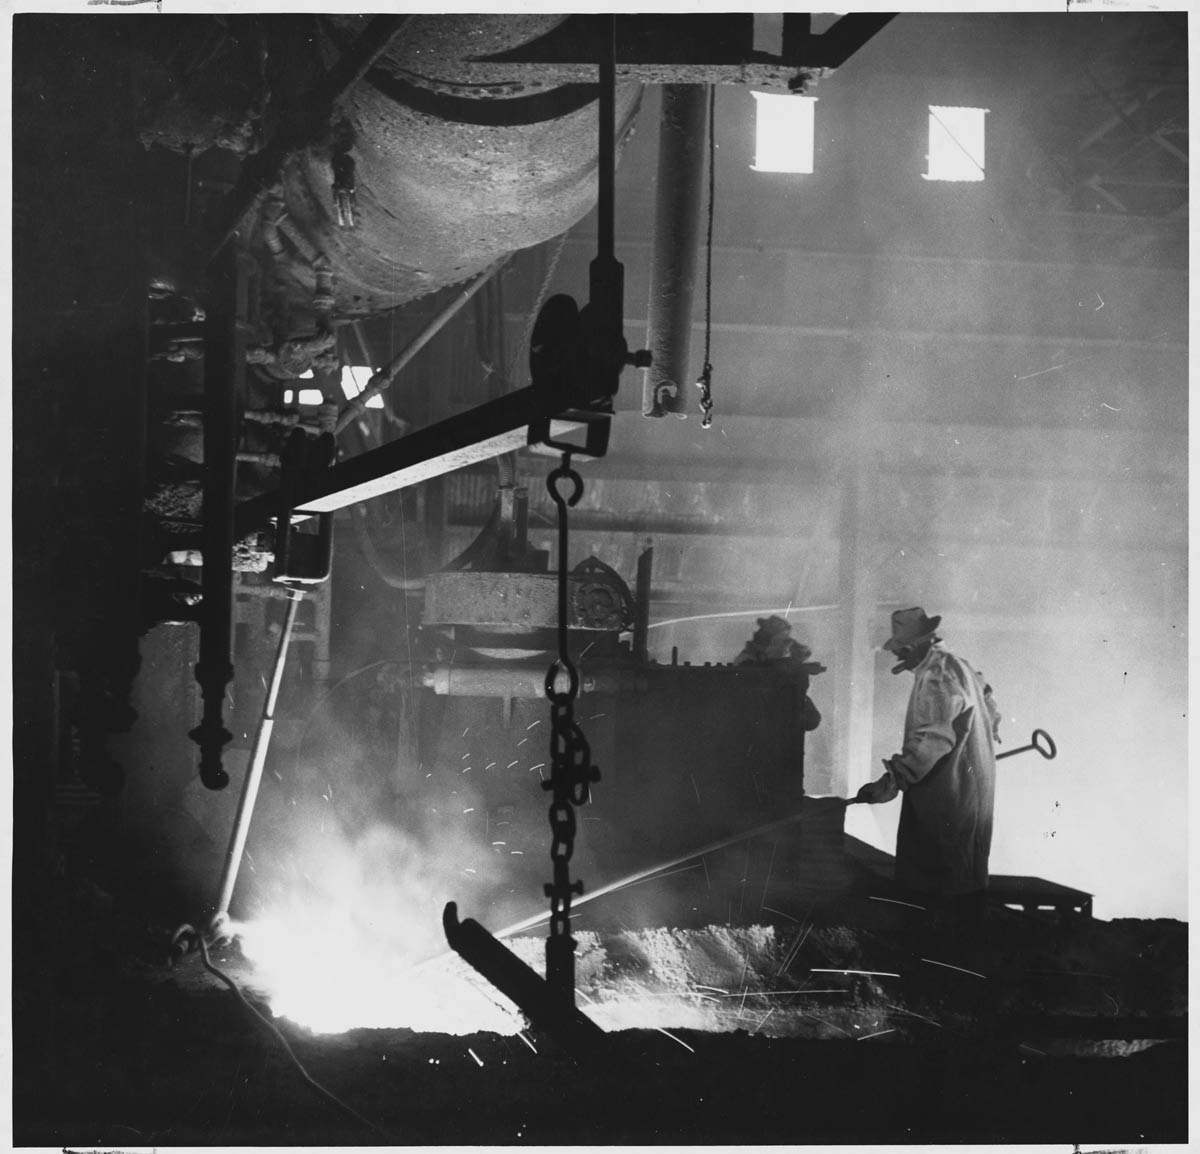 Blast furnace at M.A. Hanna Steel Co.